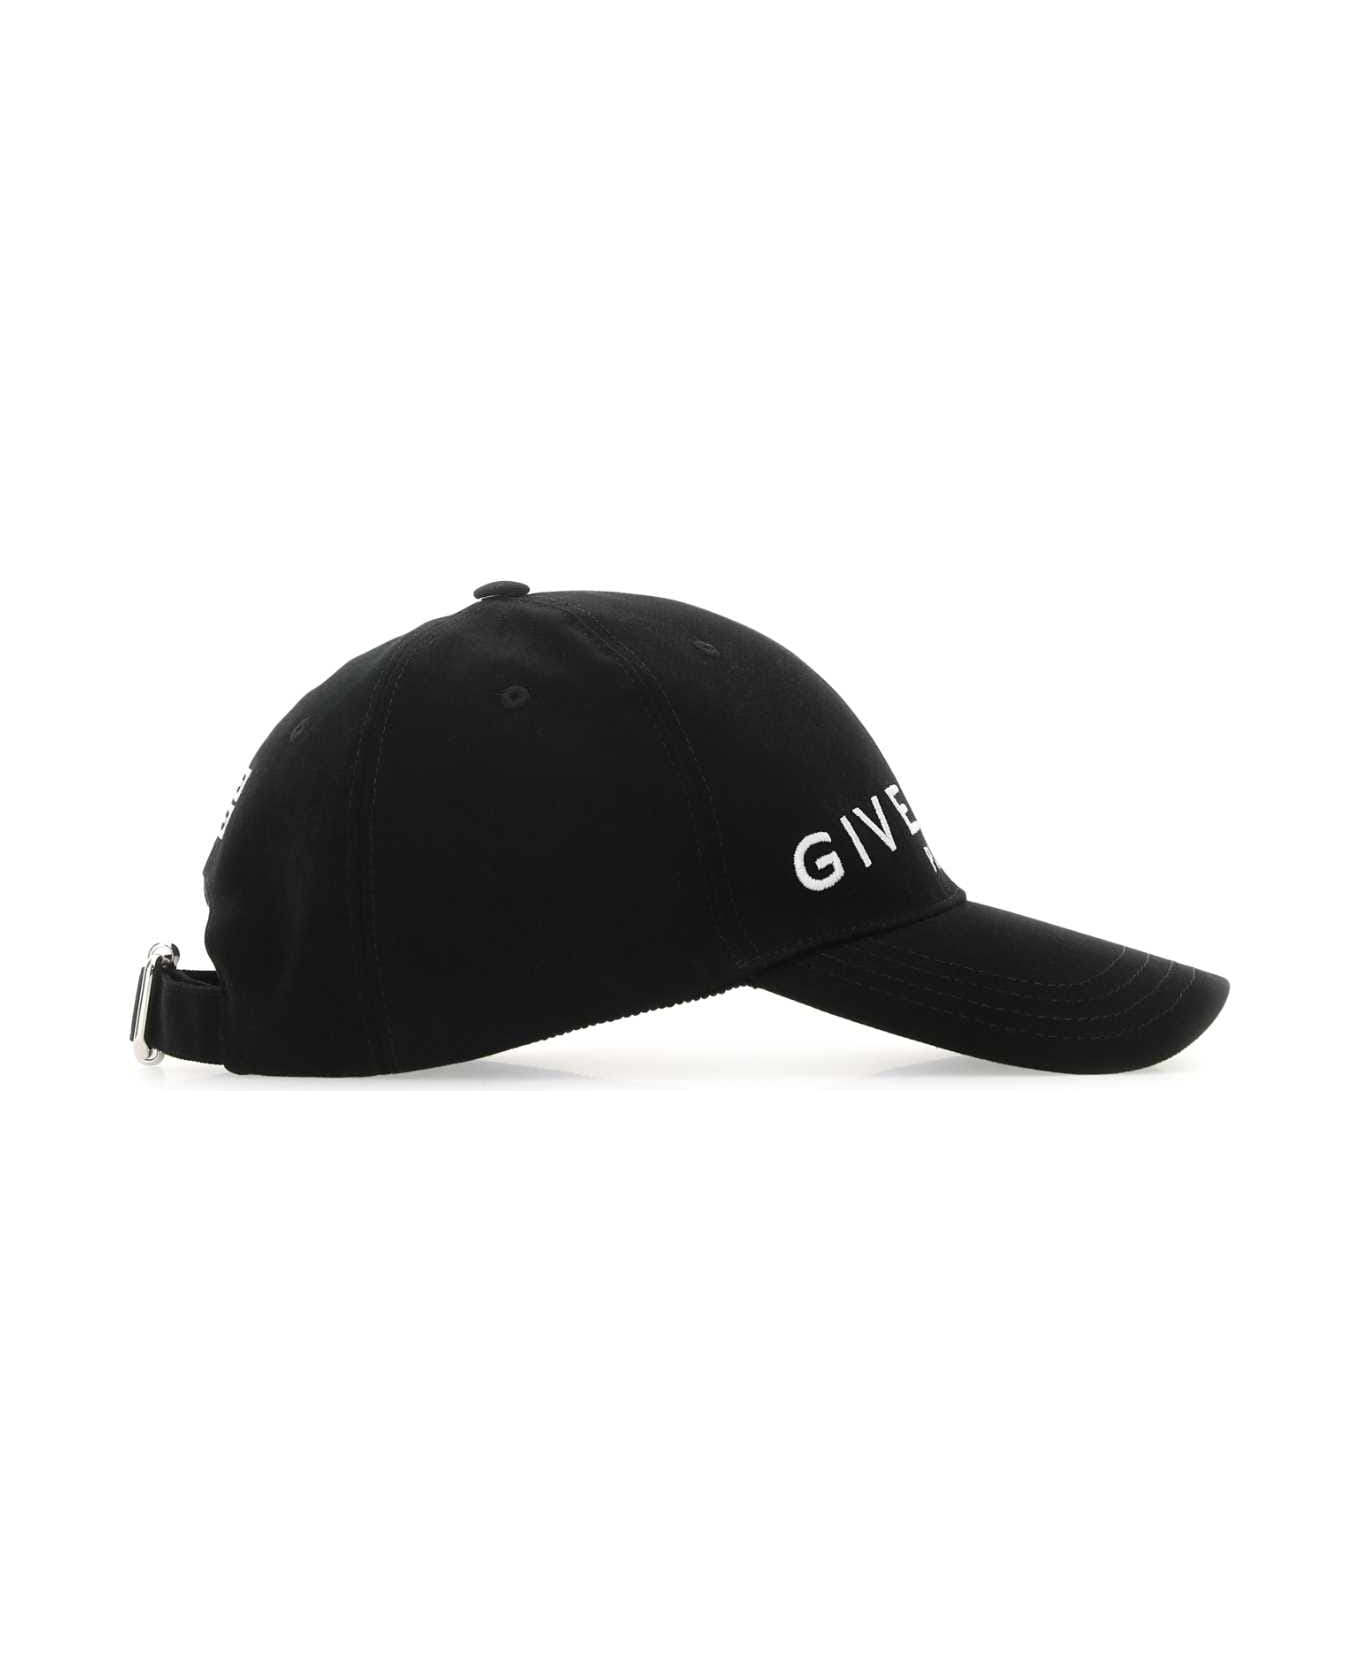 Givenchy Black Cotton Blend Baseball Cap - BLACK 帽子